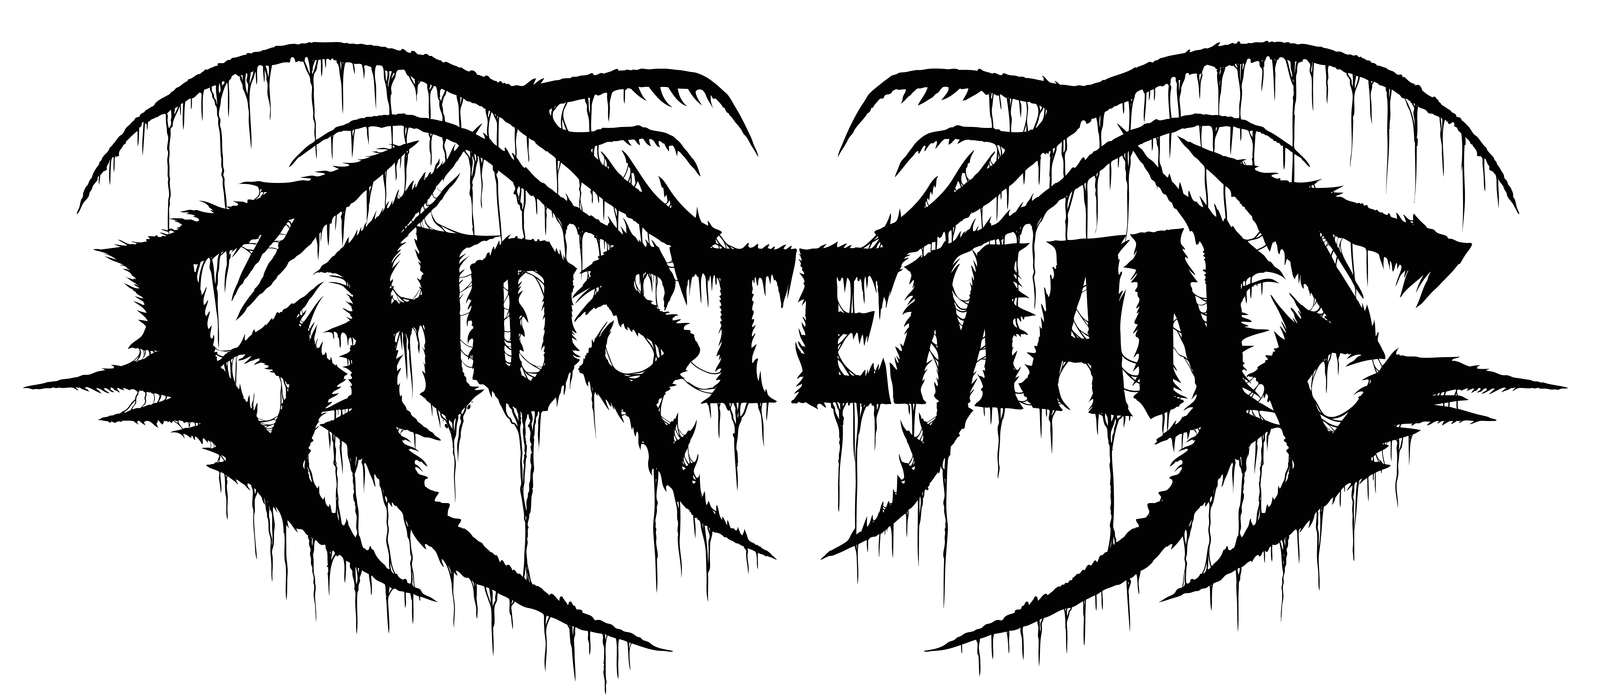 Danny Elfman Releases Ghostemane Remix Of “Native Intelligence (Featuring  Trent Reznor)”